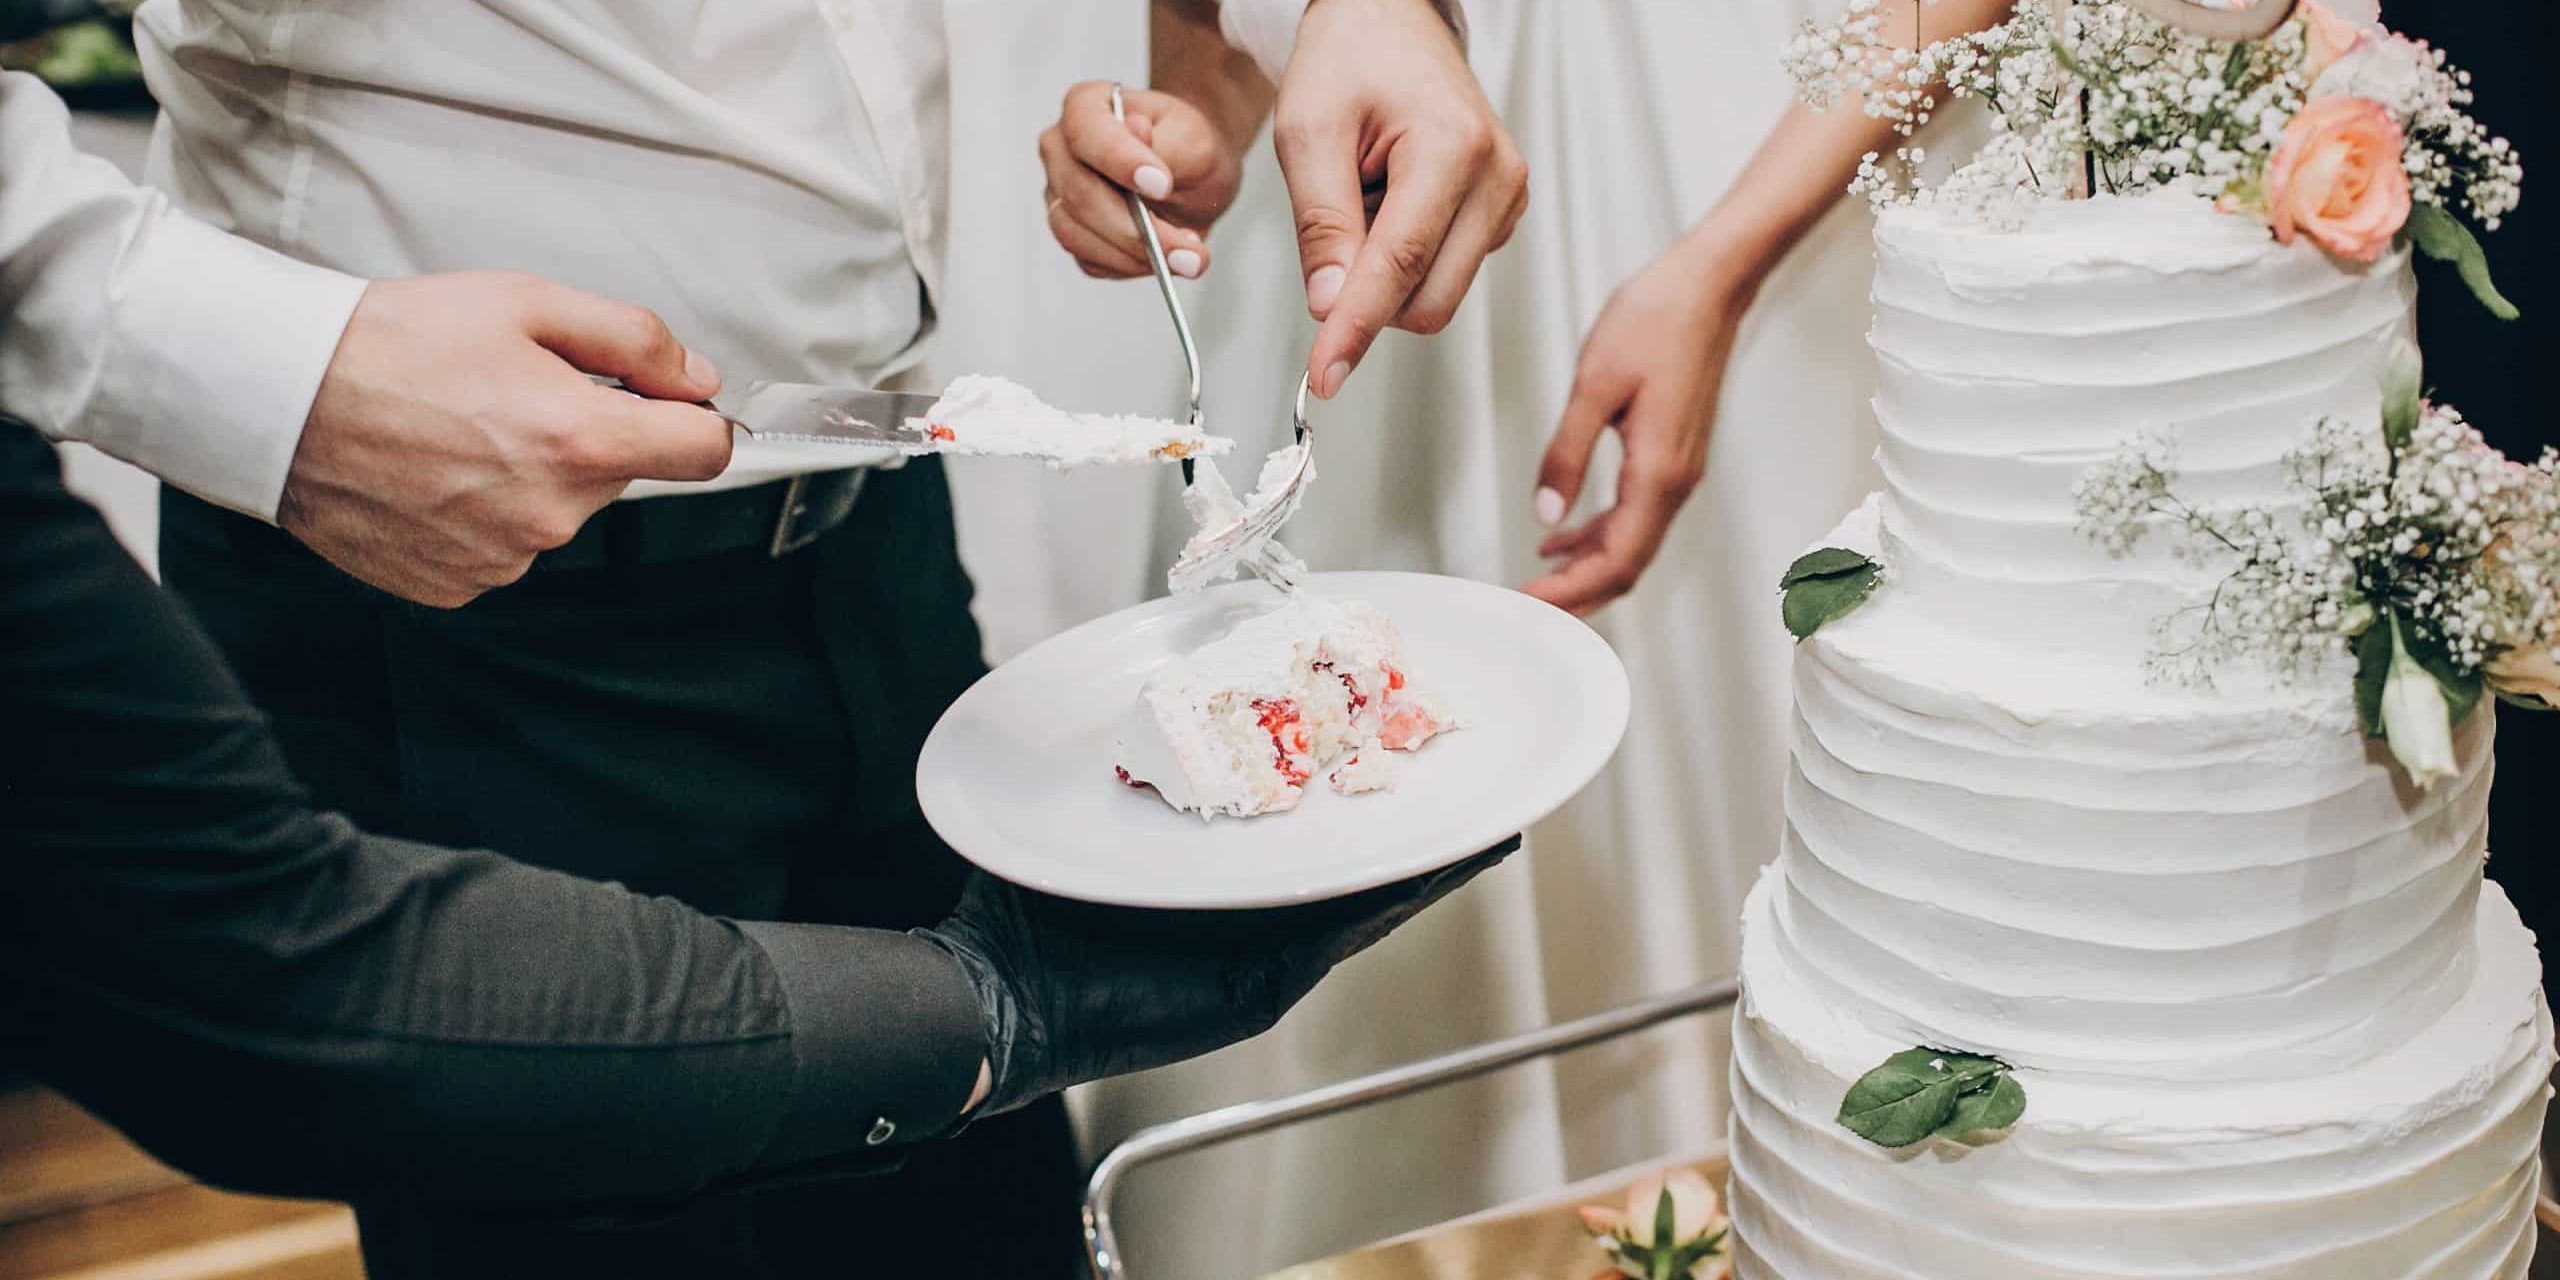 Bride and groom cutting stylish wedding cake at wedding reception in restaurant. Wedding couple holding slice of  wedding cake decorated with flowers